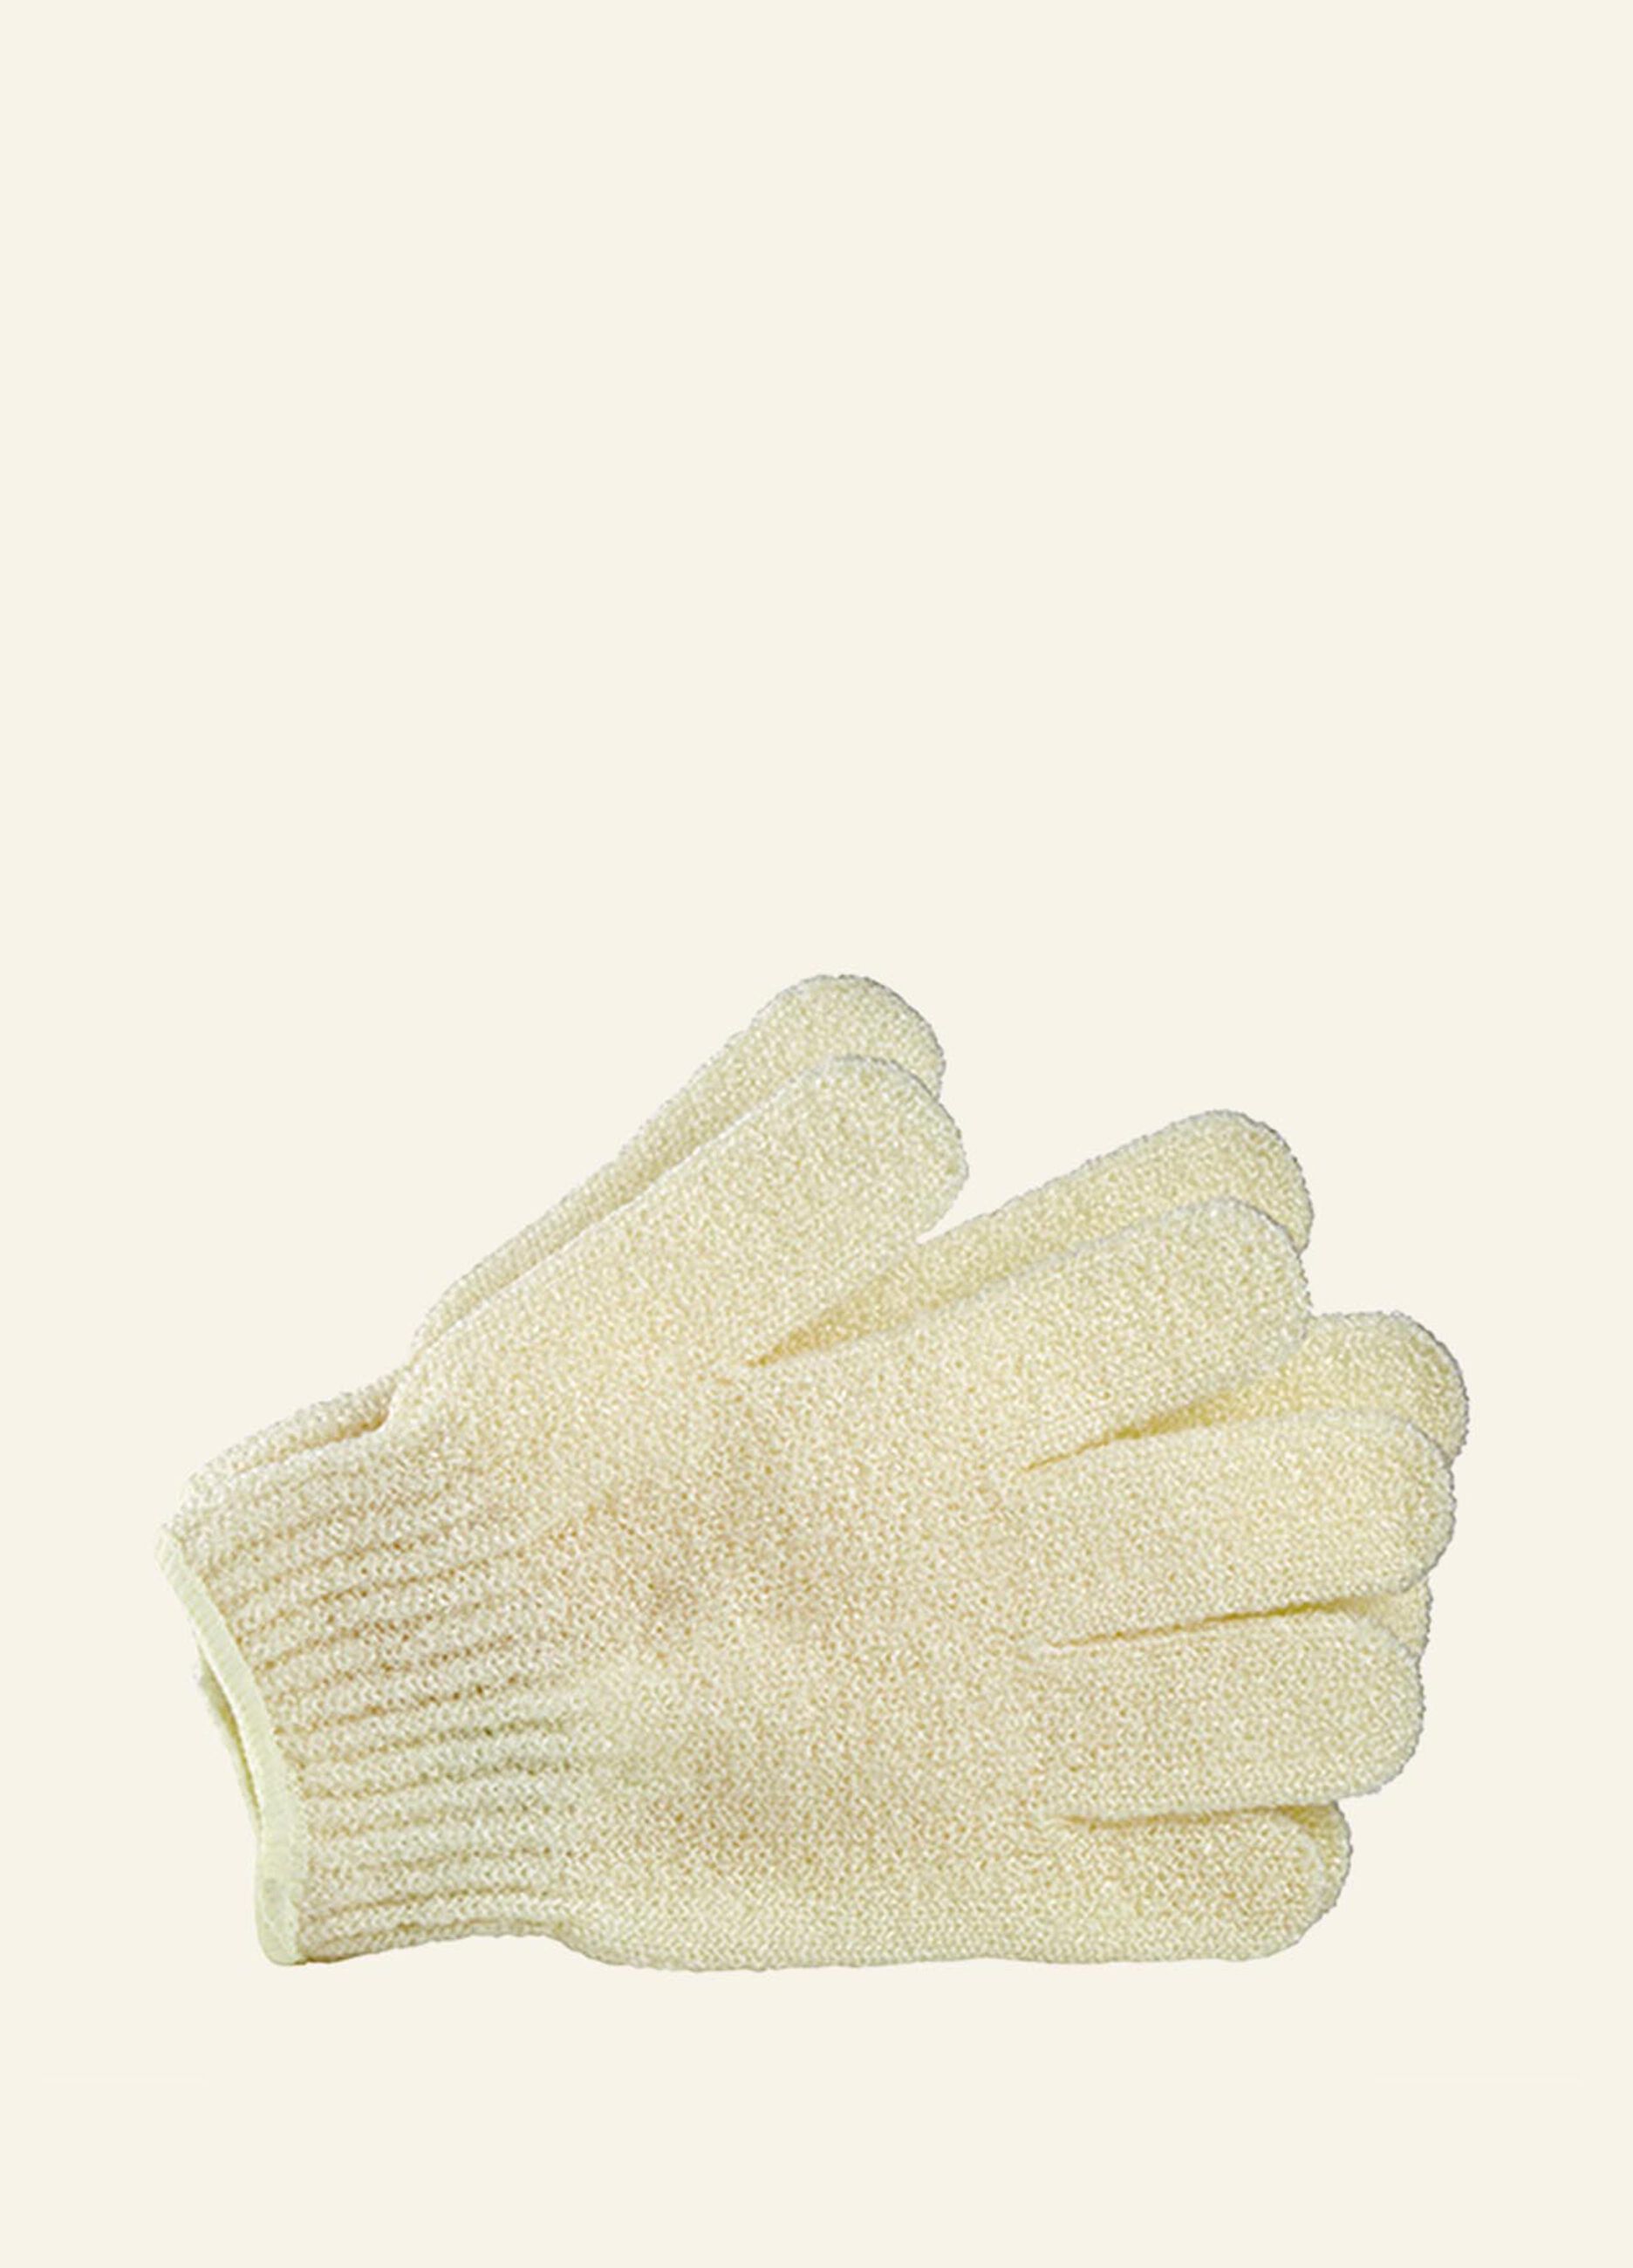 The Body Shop bath gloves